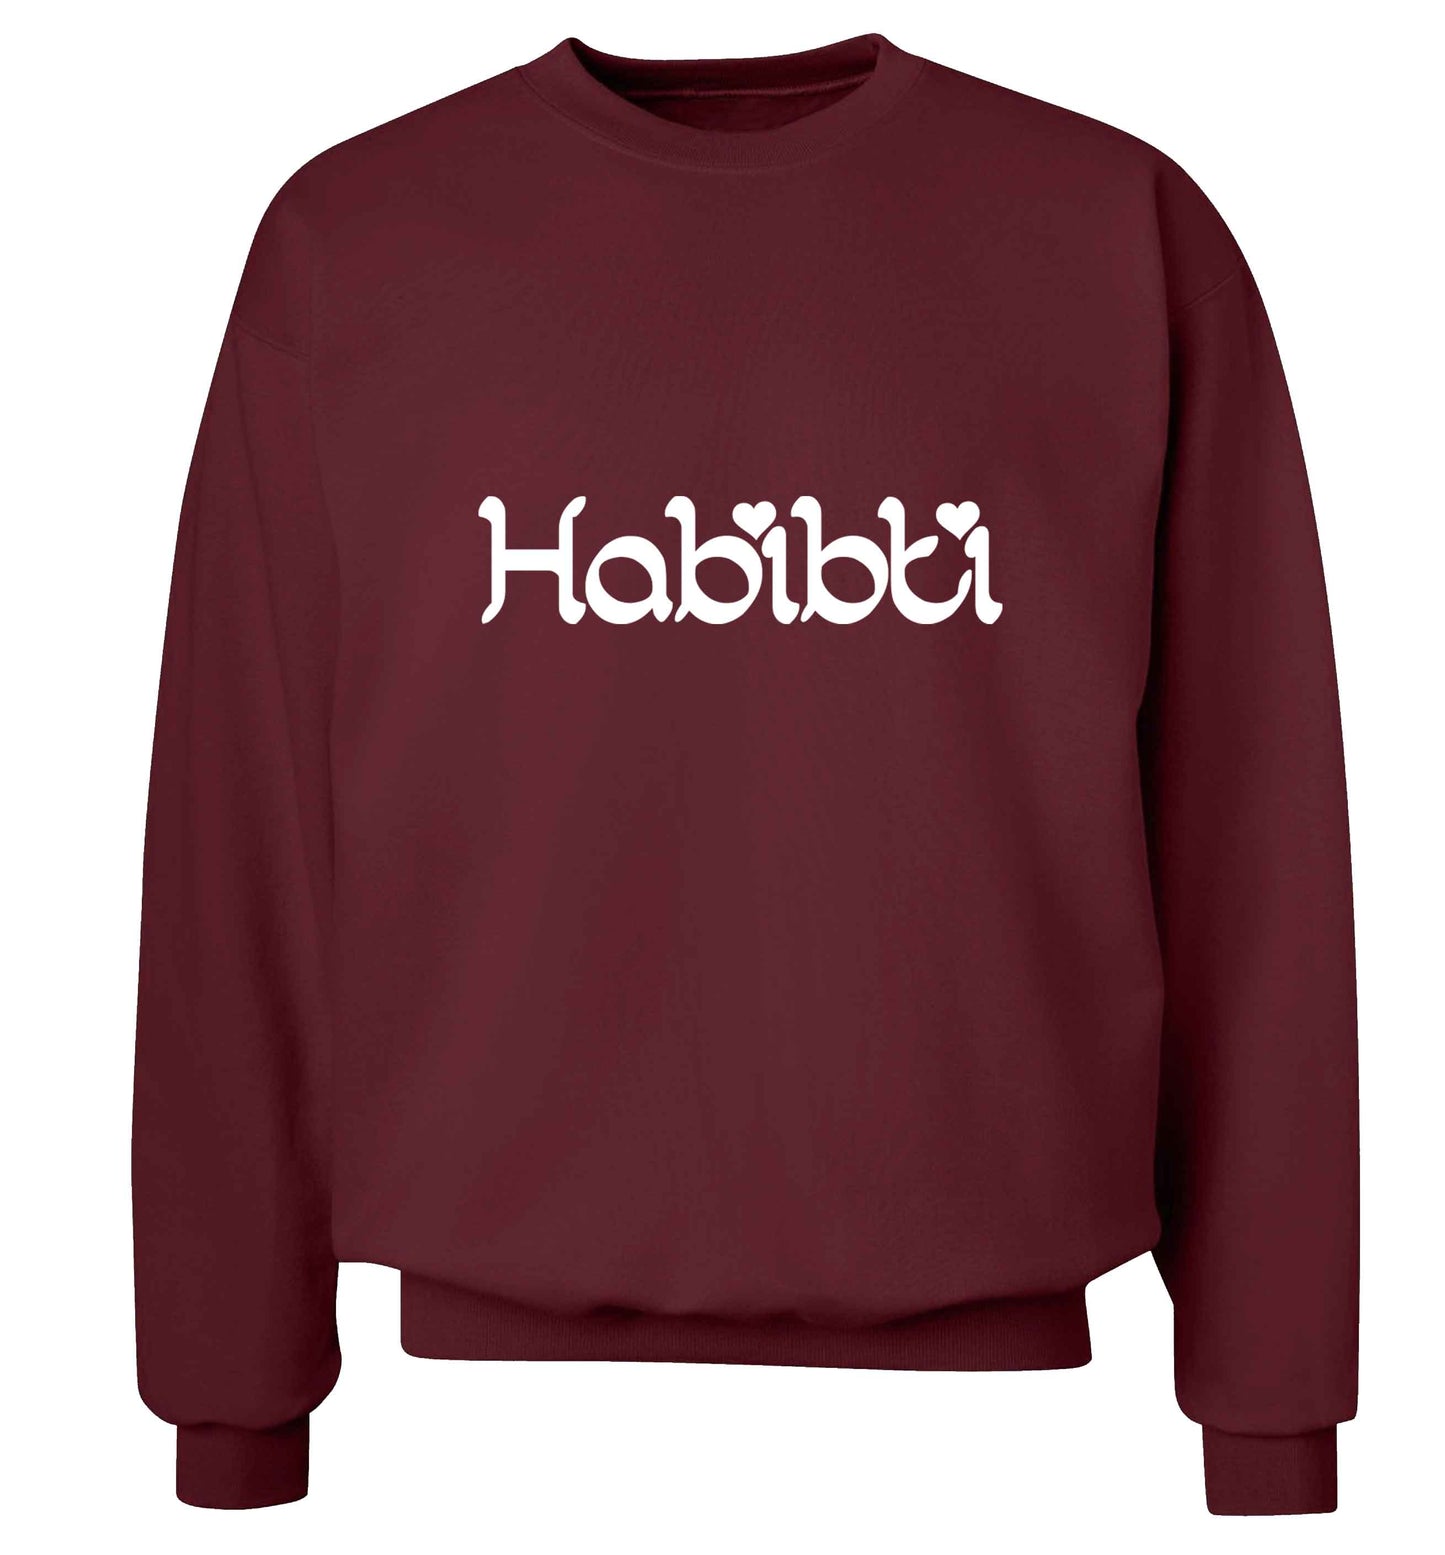 Habibiti adult's unisex maroon sweater 2XL